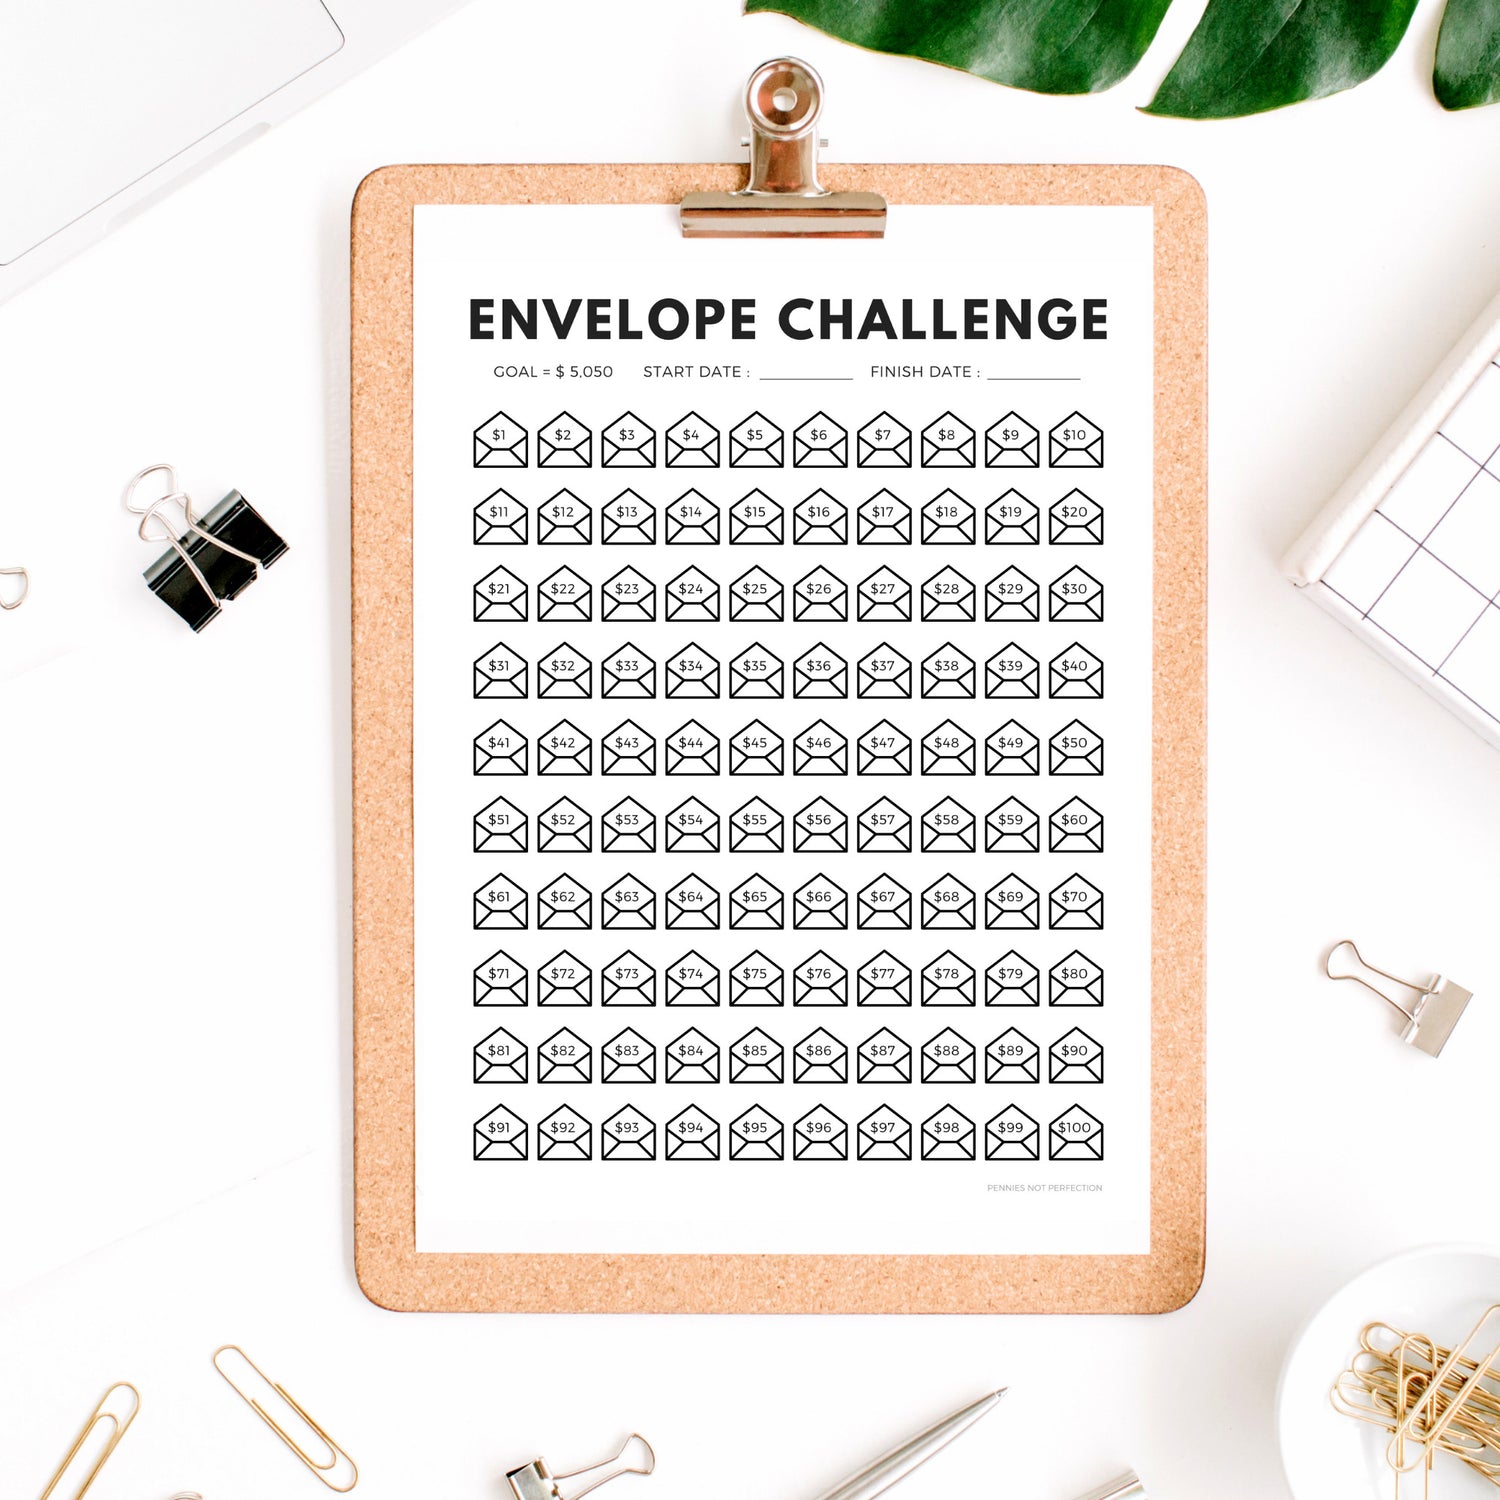 Printable 100 Envelope Challenge Savings Tracker 5,050 Dollars